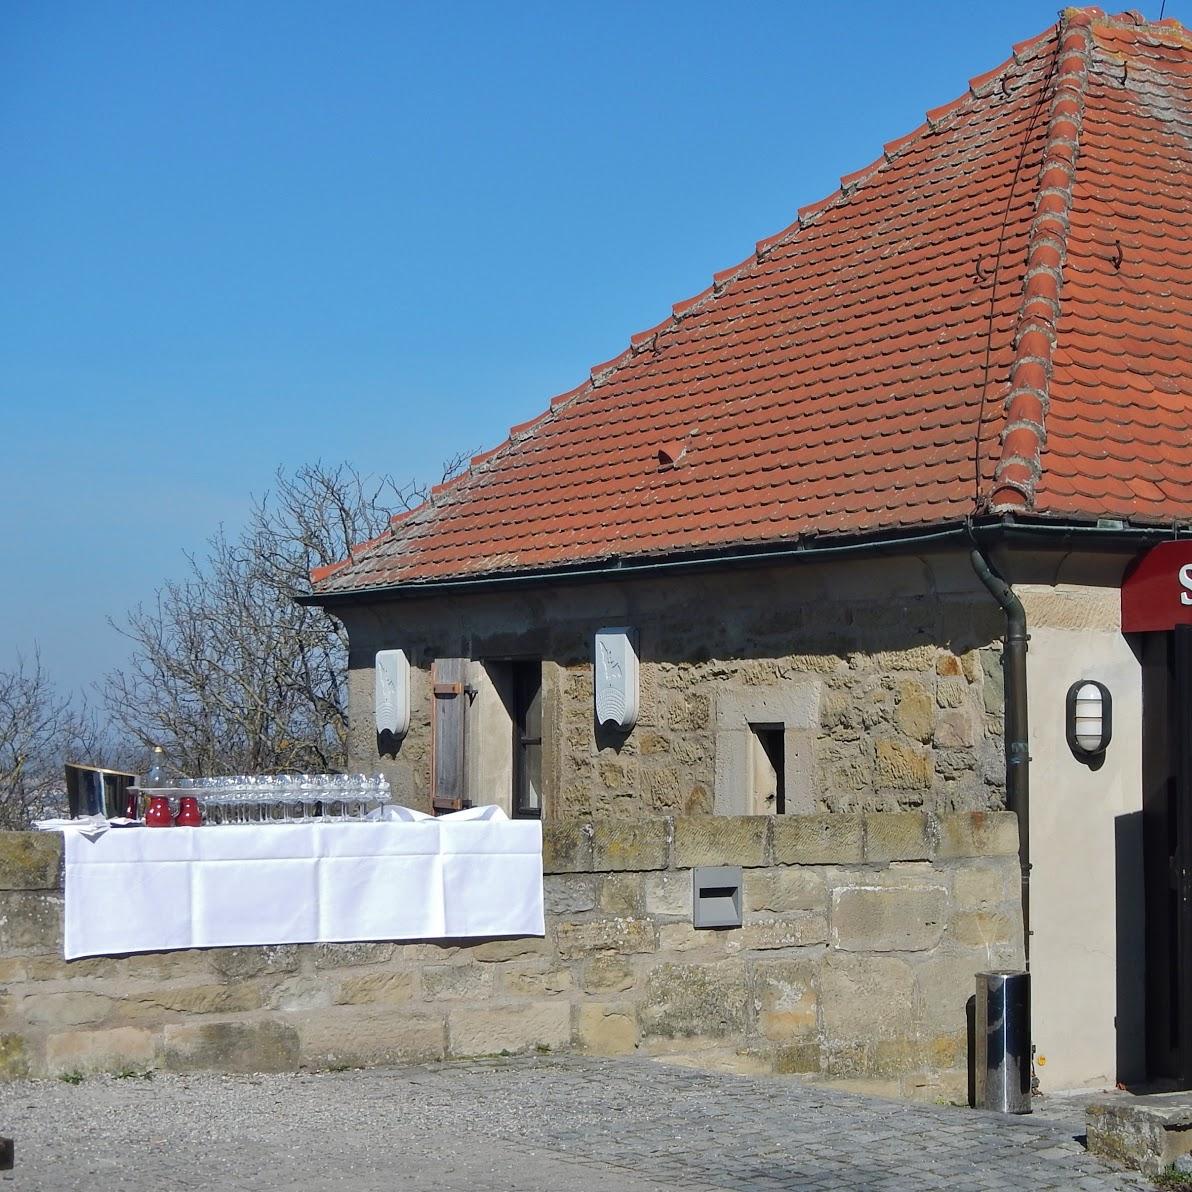 Restaurant "Schubart Garten" in  Asperg